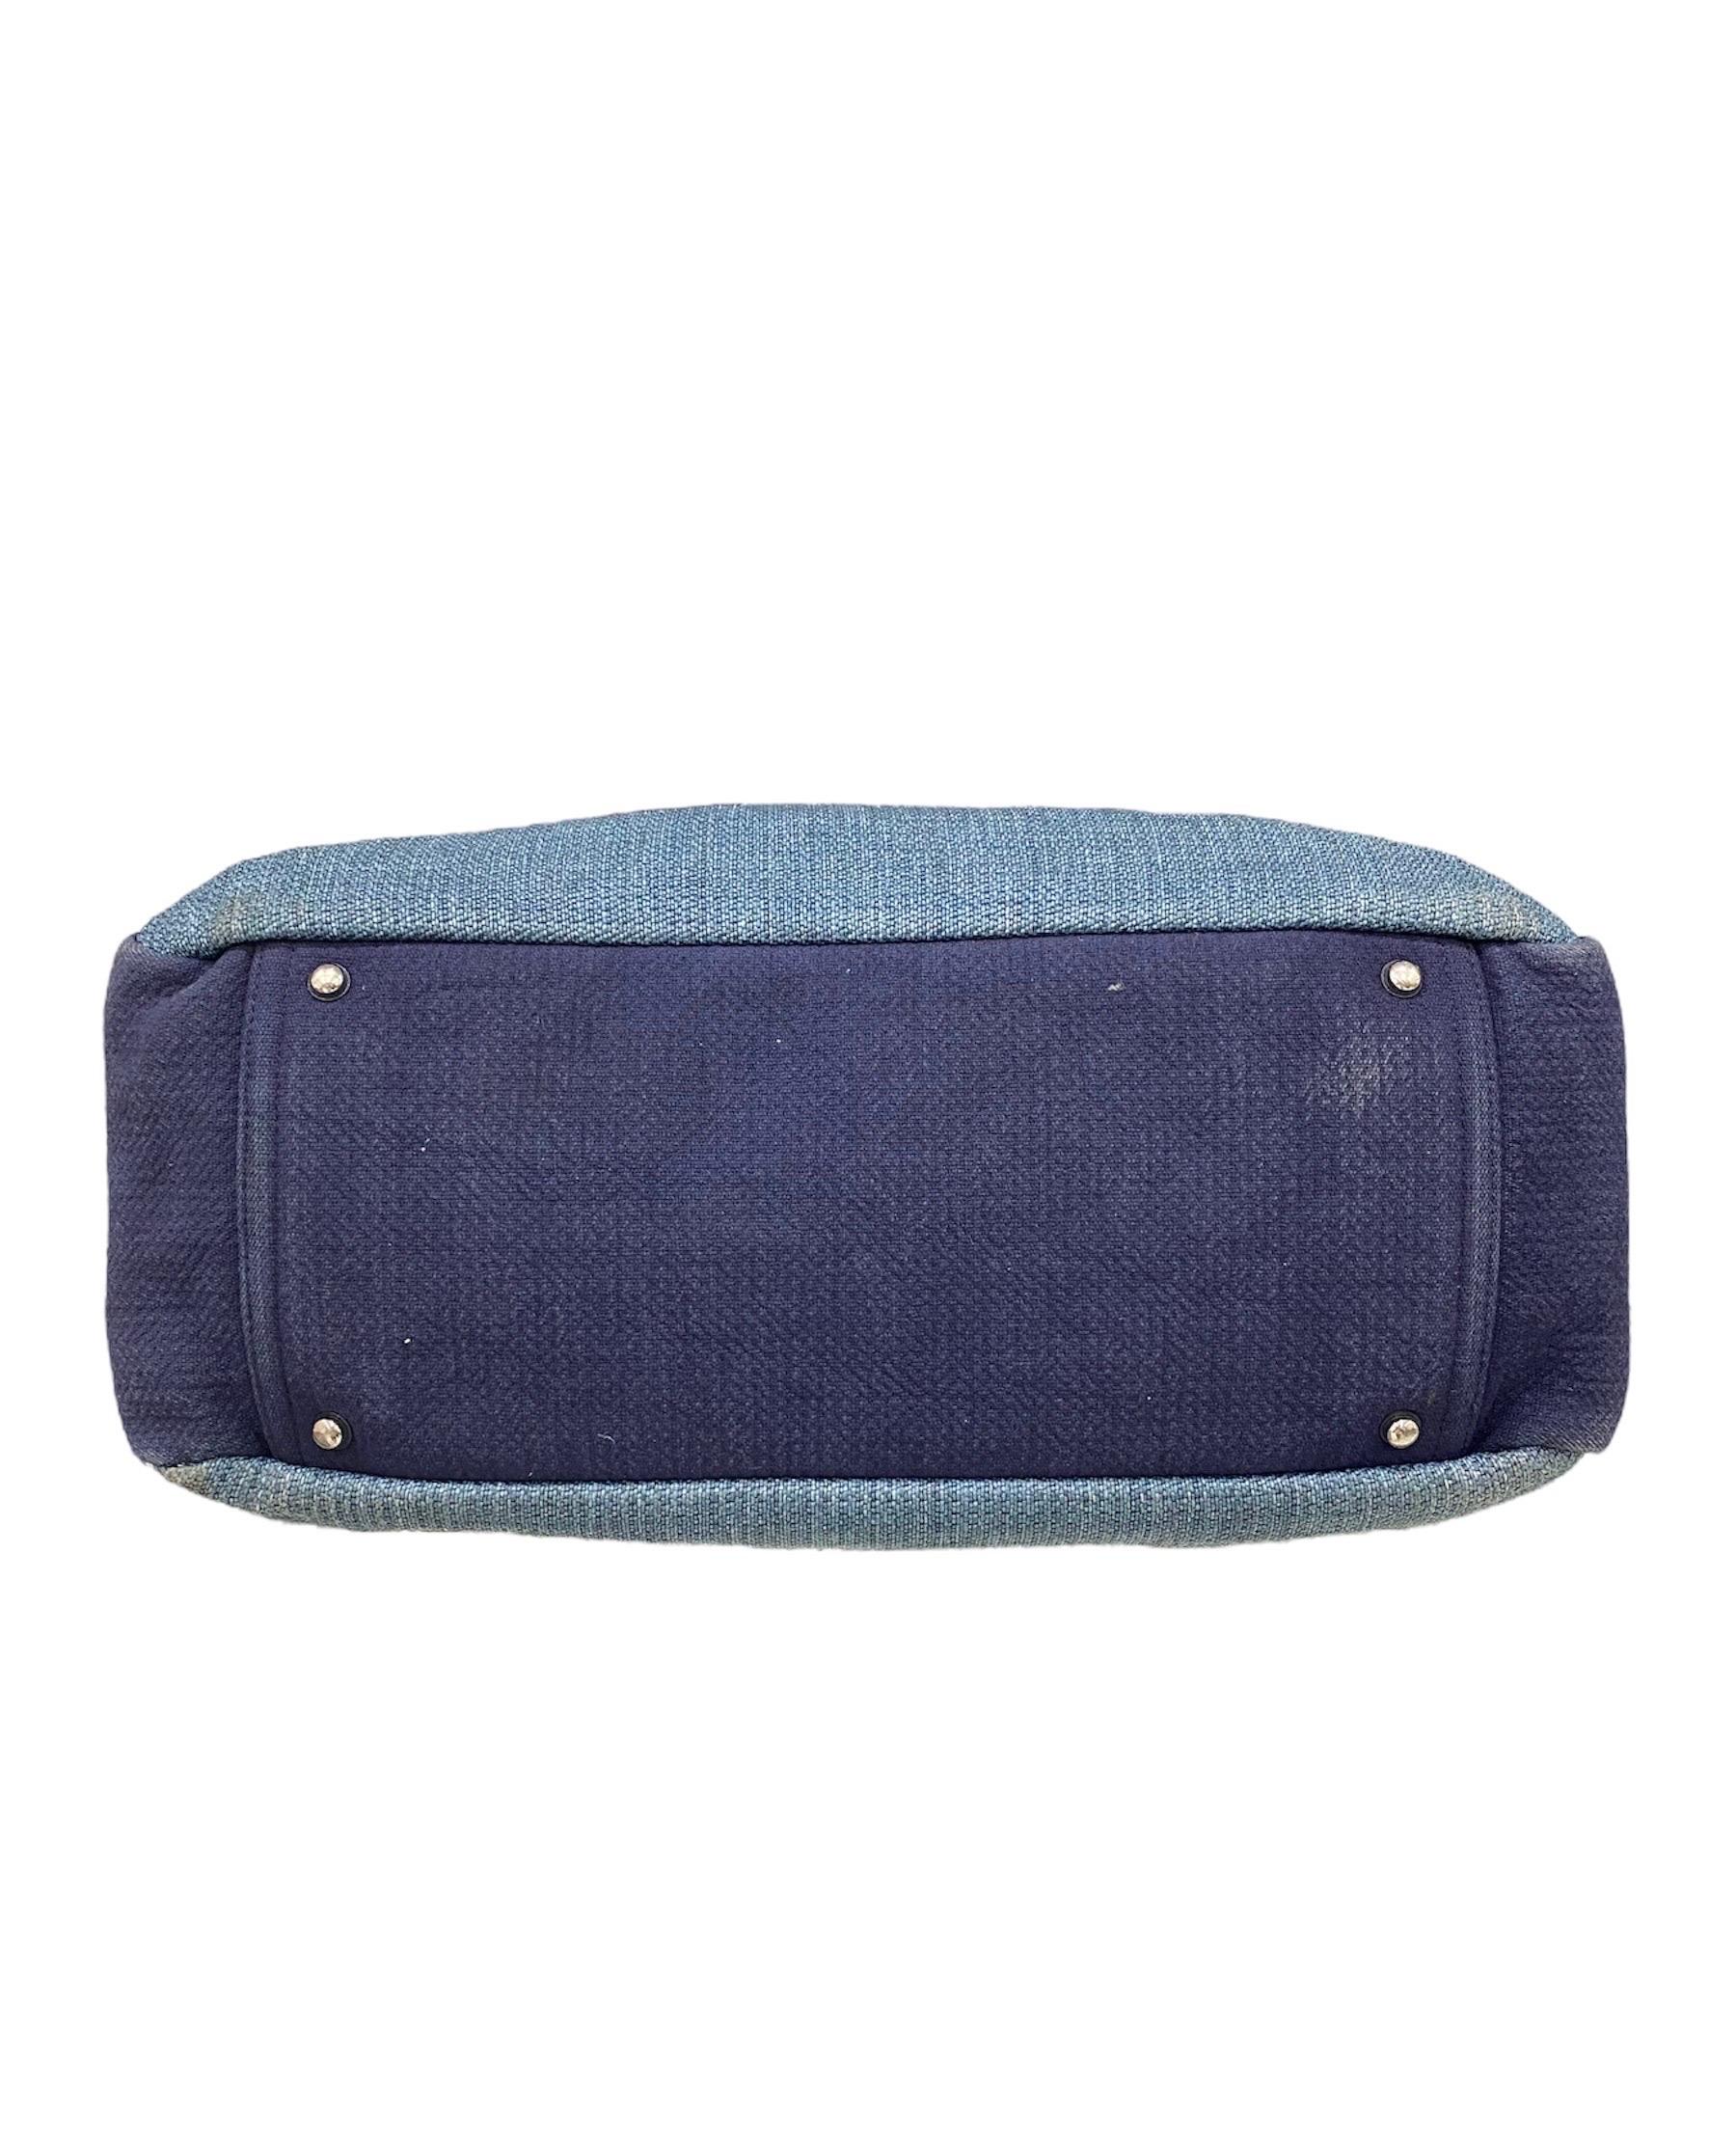 2018 Chanel Duffle Bag aus Segeltuch Blau im Angebot 5